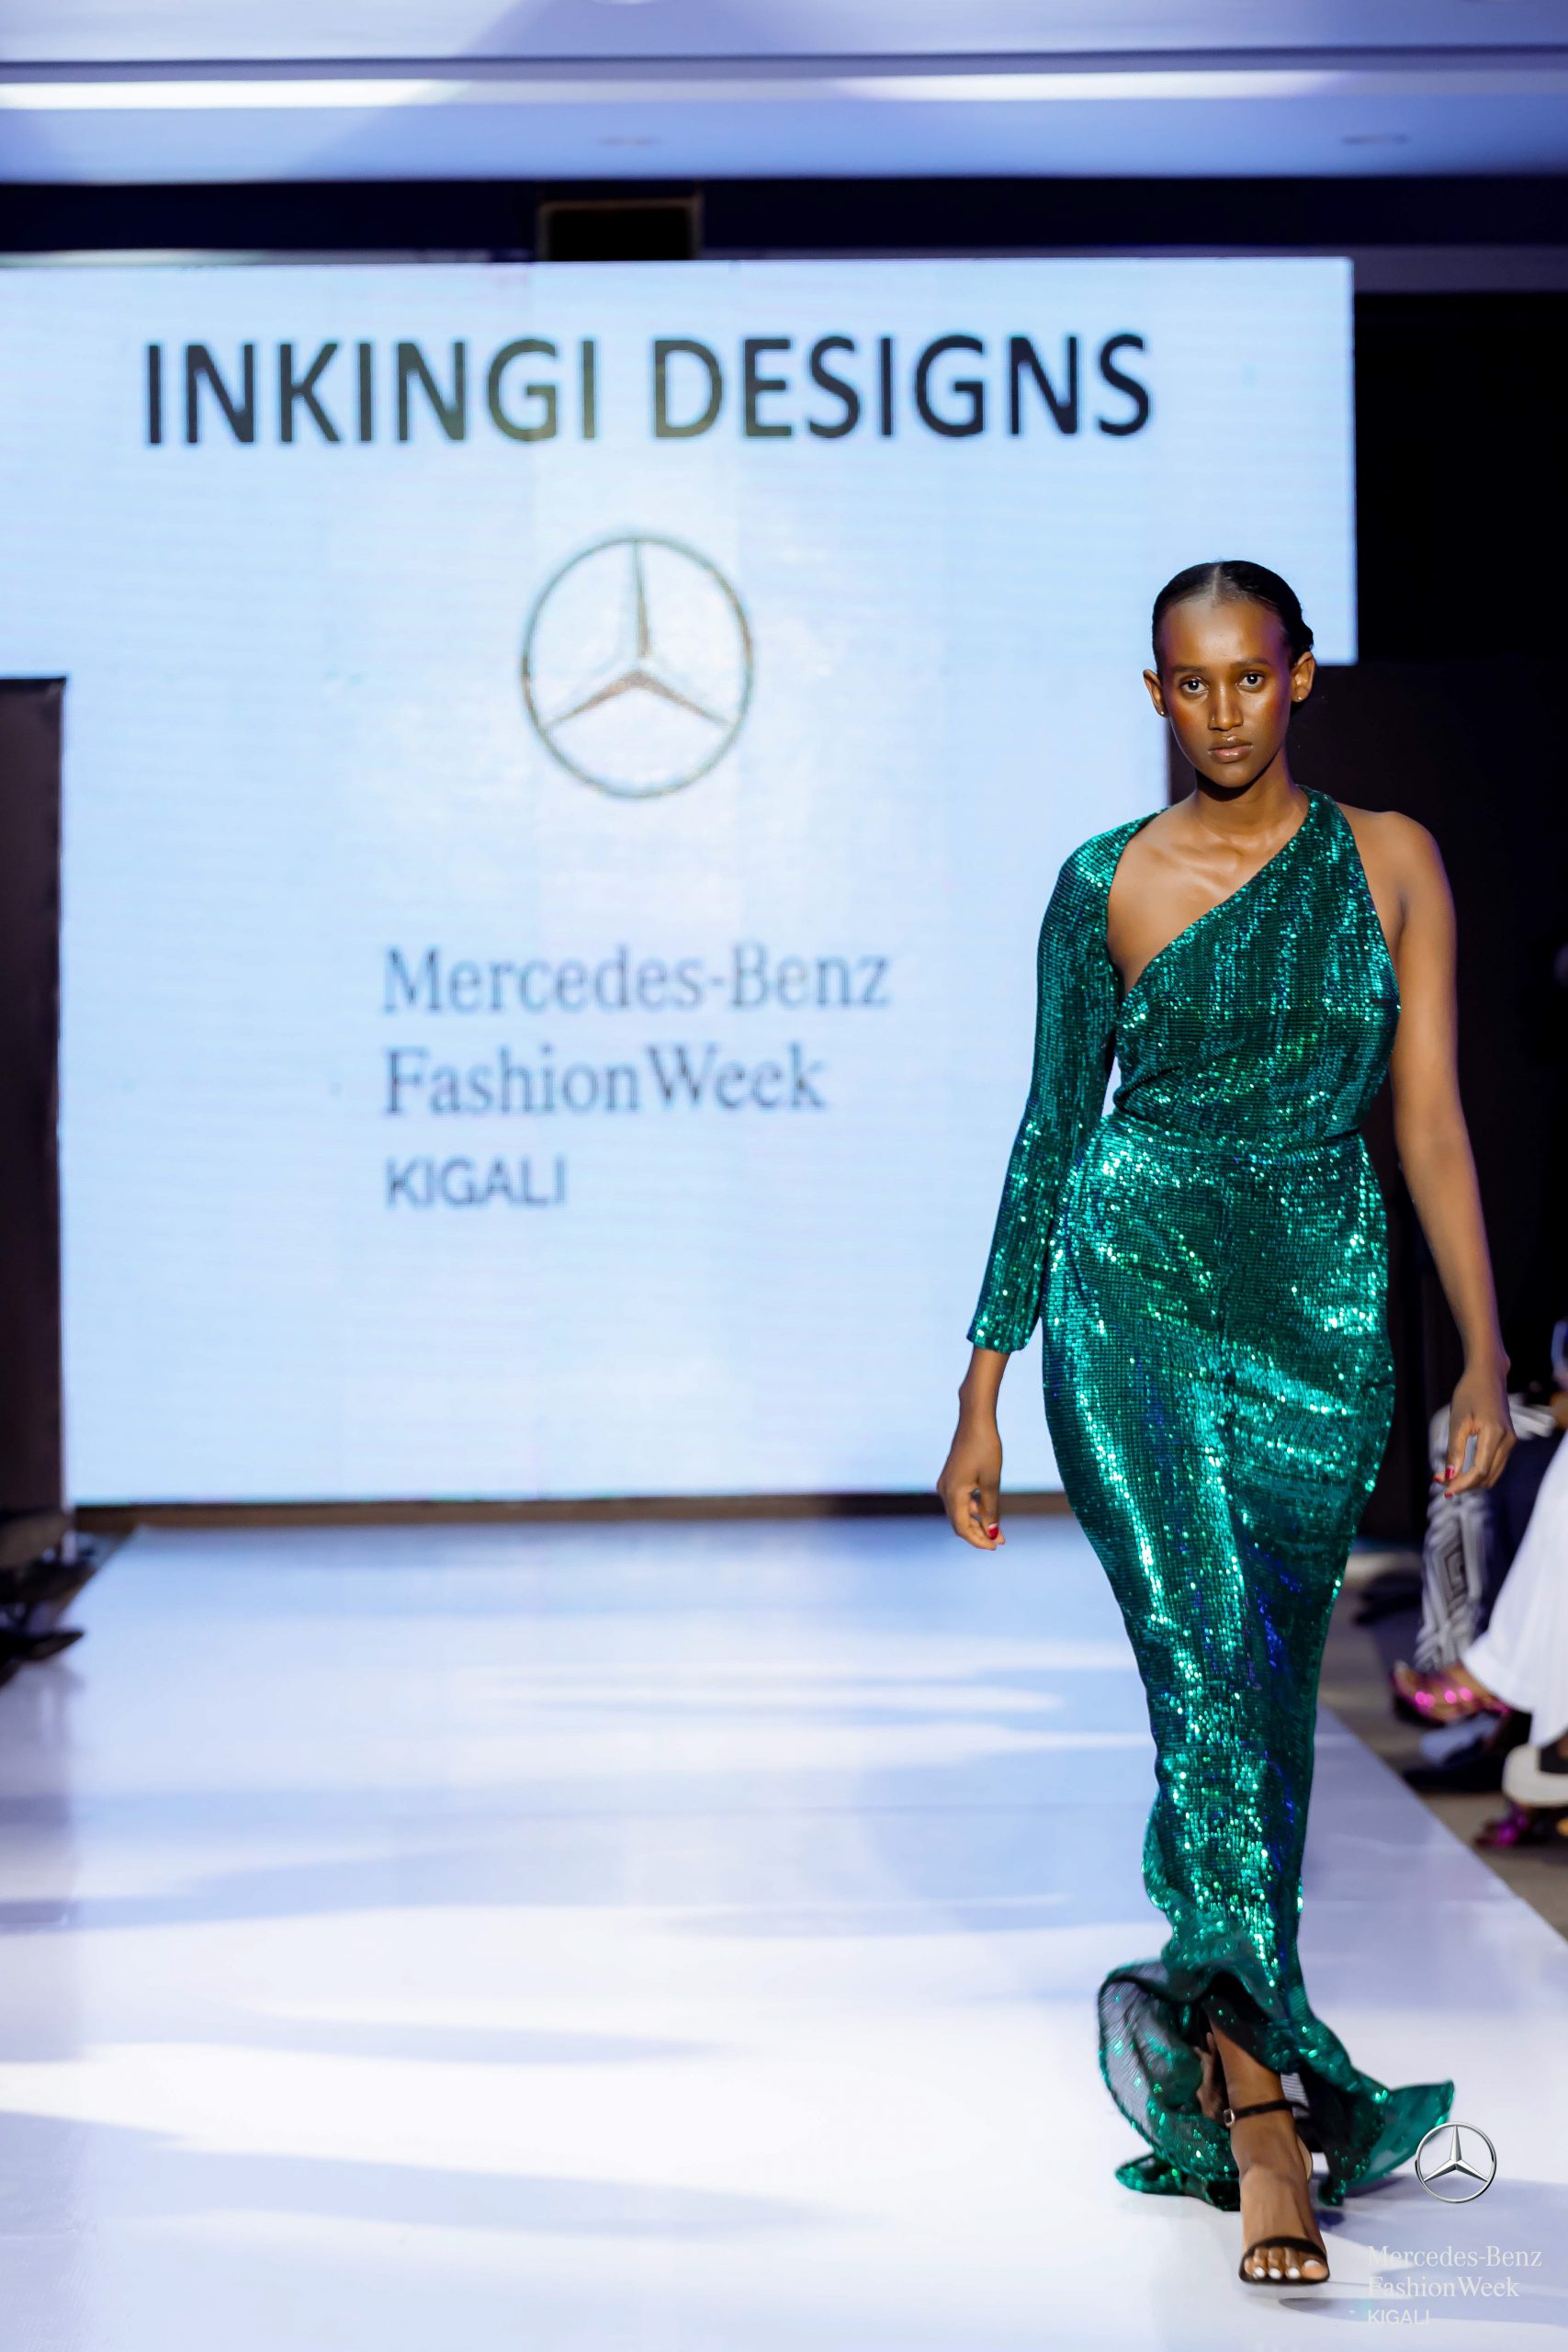 inkingi designs Kigali